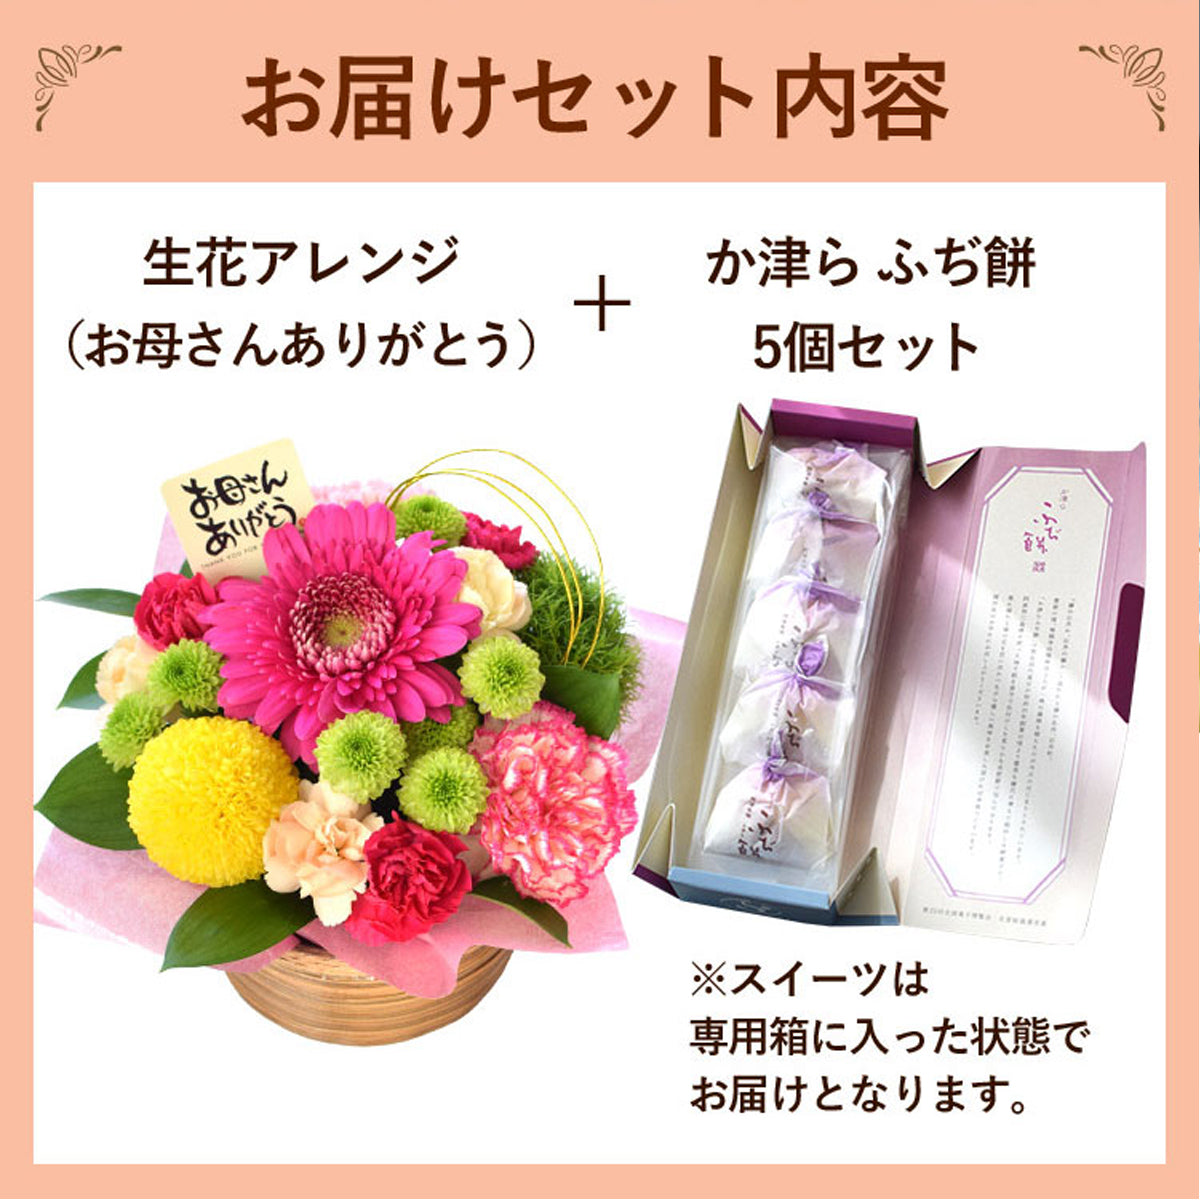 【Mother's Day Special】Seasonal Arrangement & Fudimochi Set